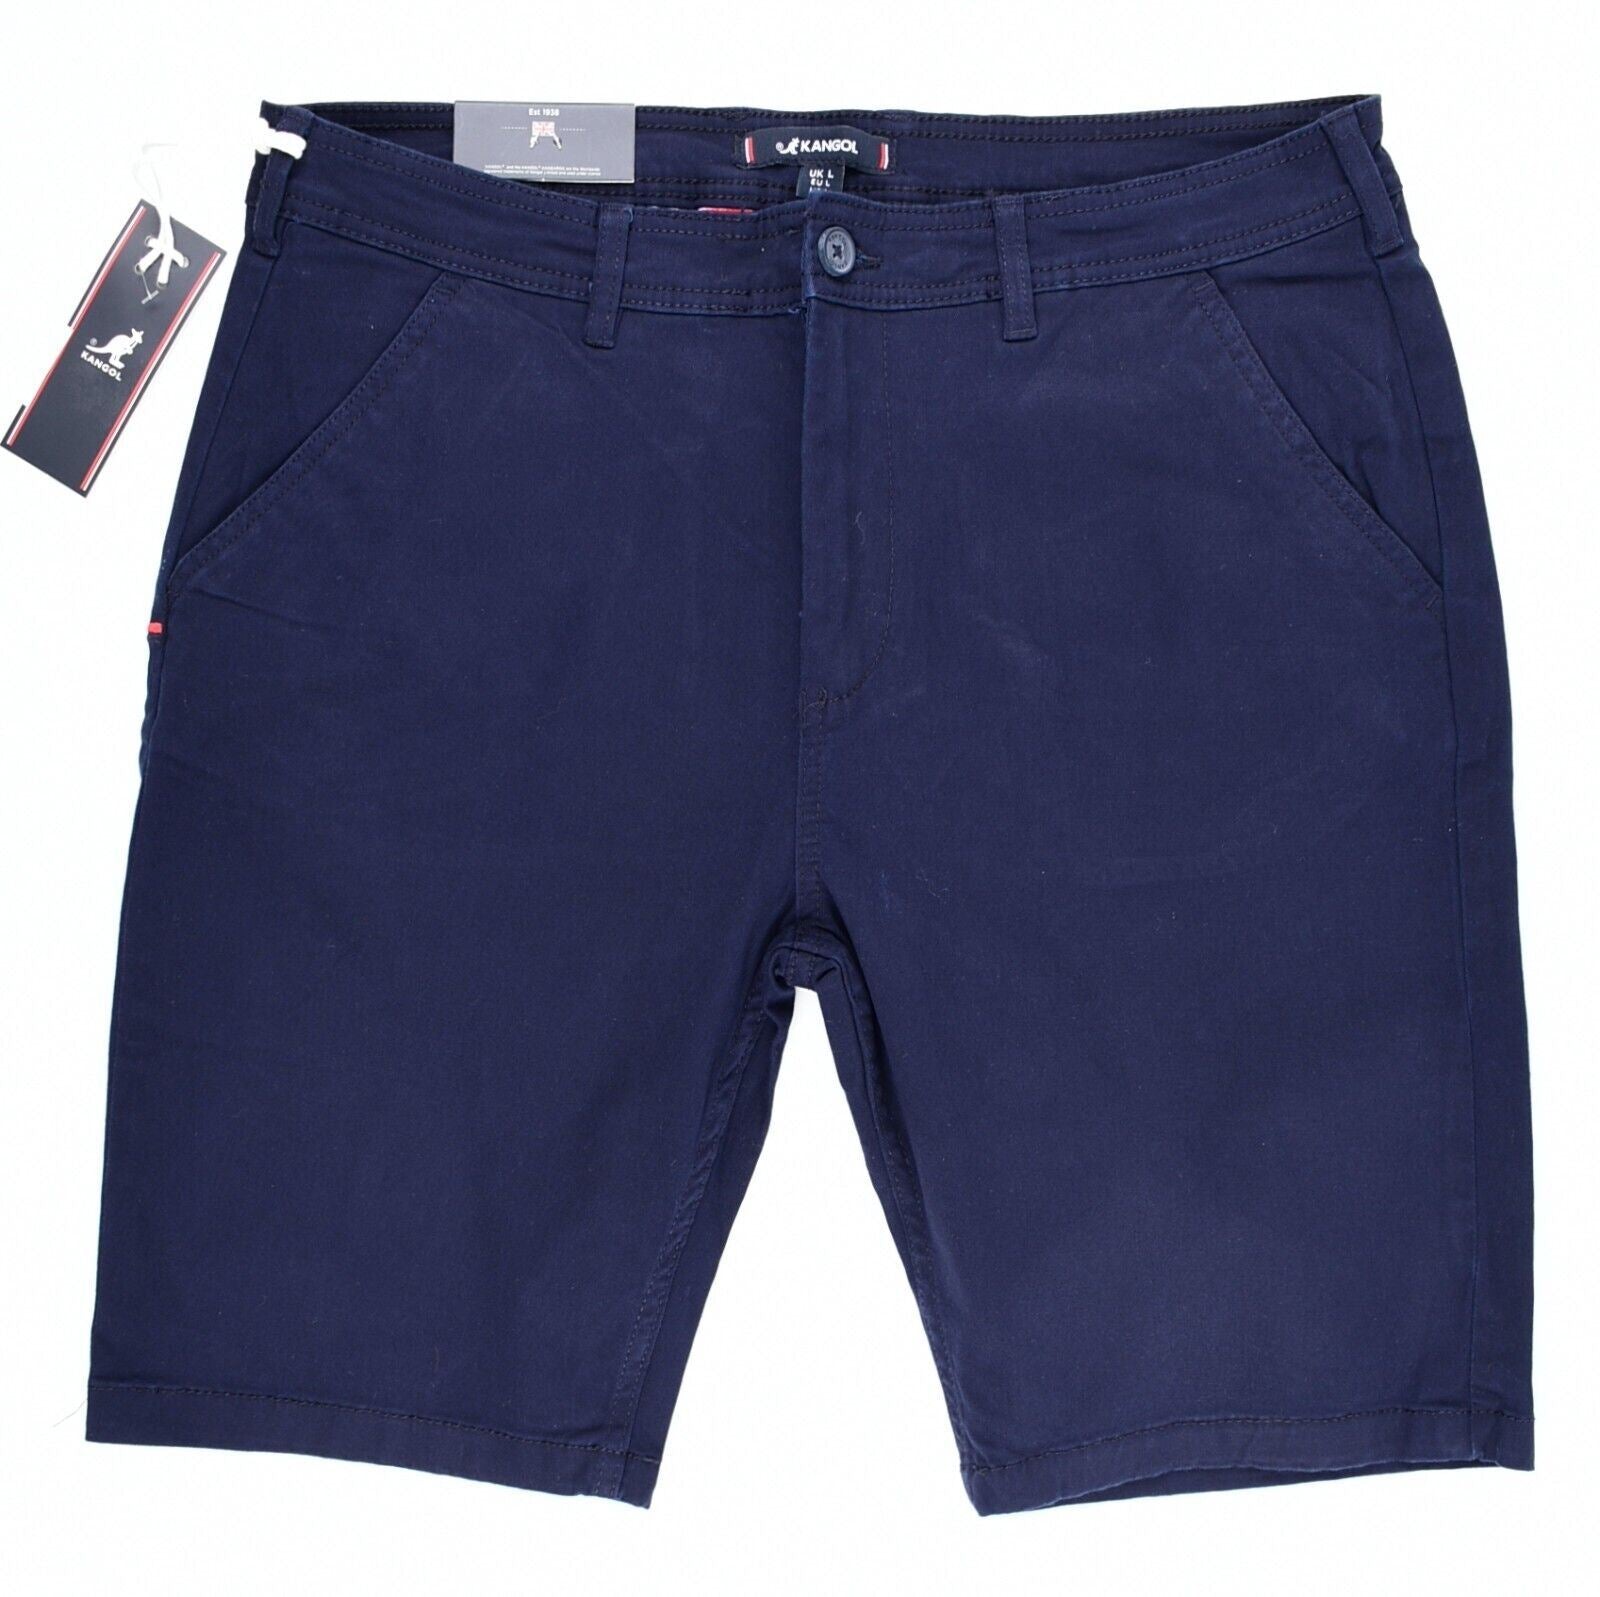 KANGOL Mens Chino Shorts, Navy Blue, size LARGE